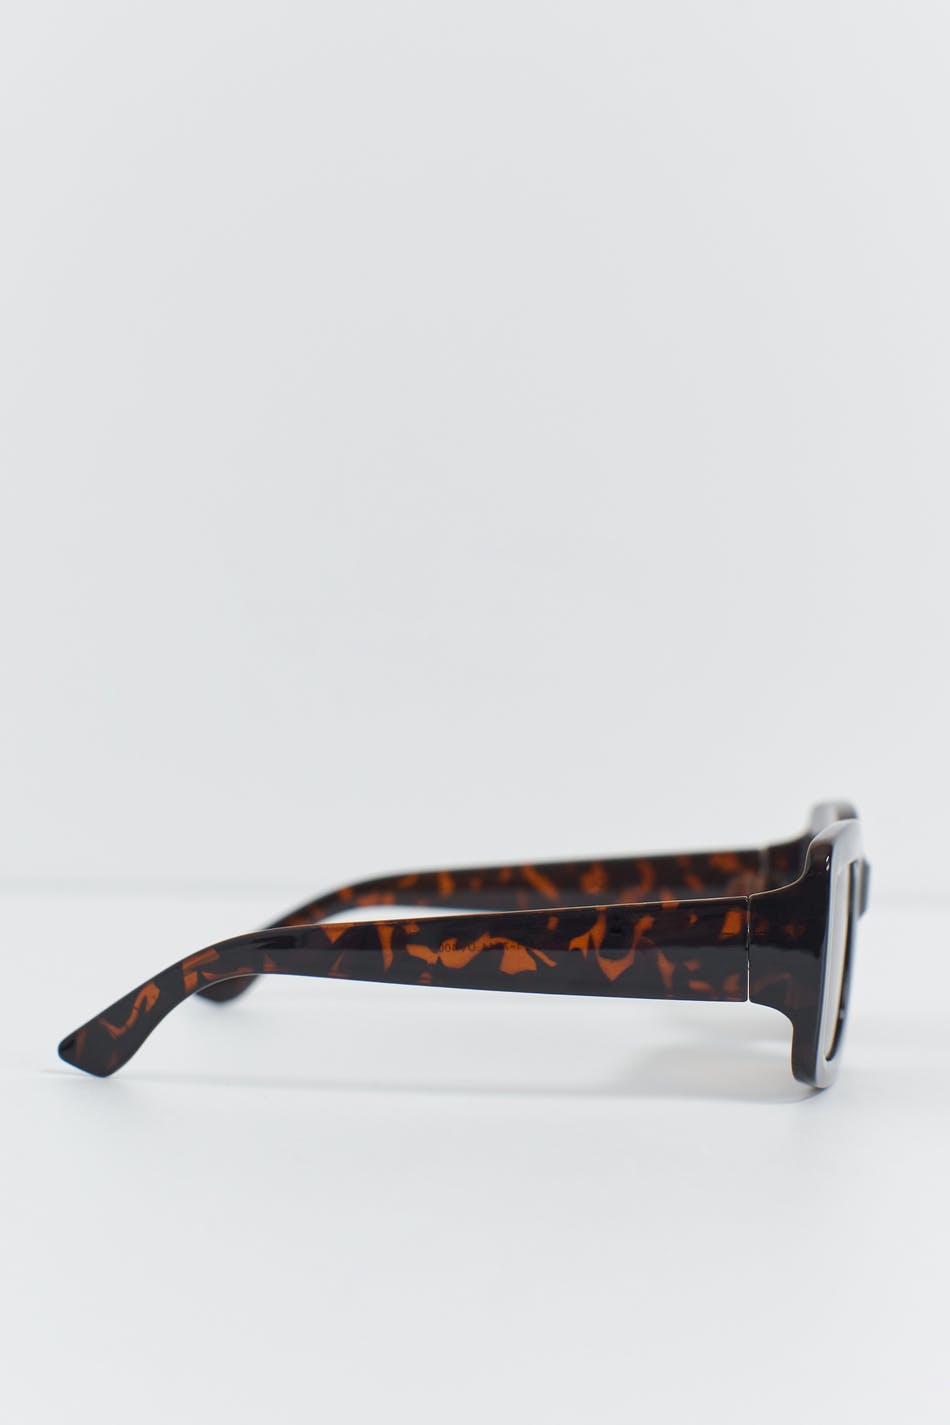 Buy Basik Eyewear - Extremely Dark X Large Oversized Flat Top Rectangular  UV400 Sunglasses (Matte Black, 5.7 in. (146 mm)) at